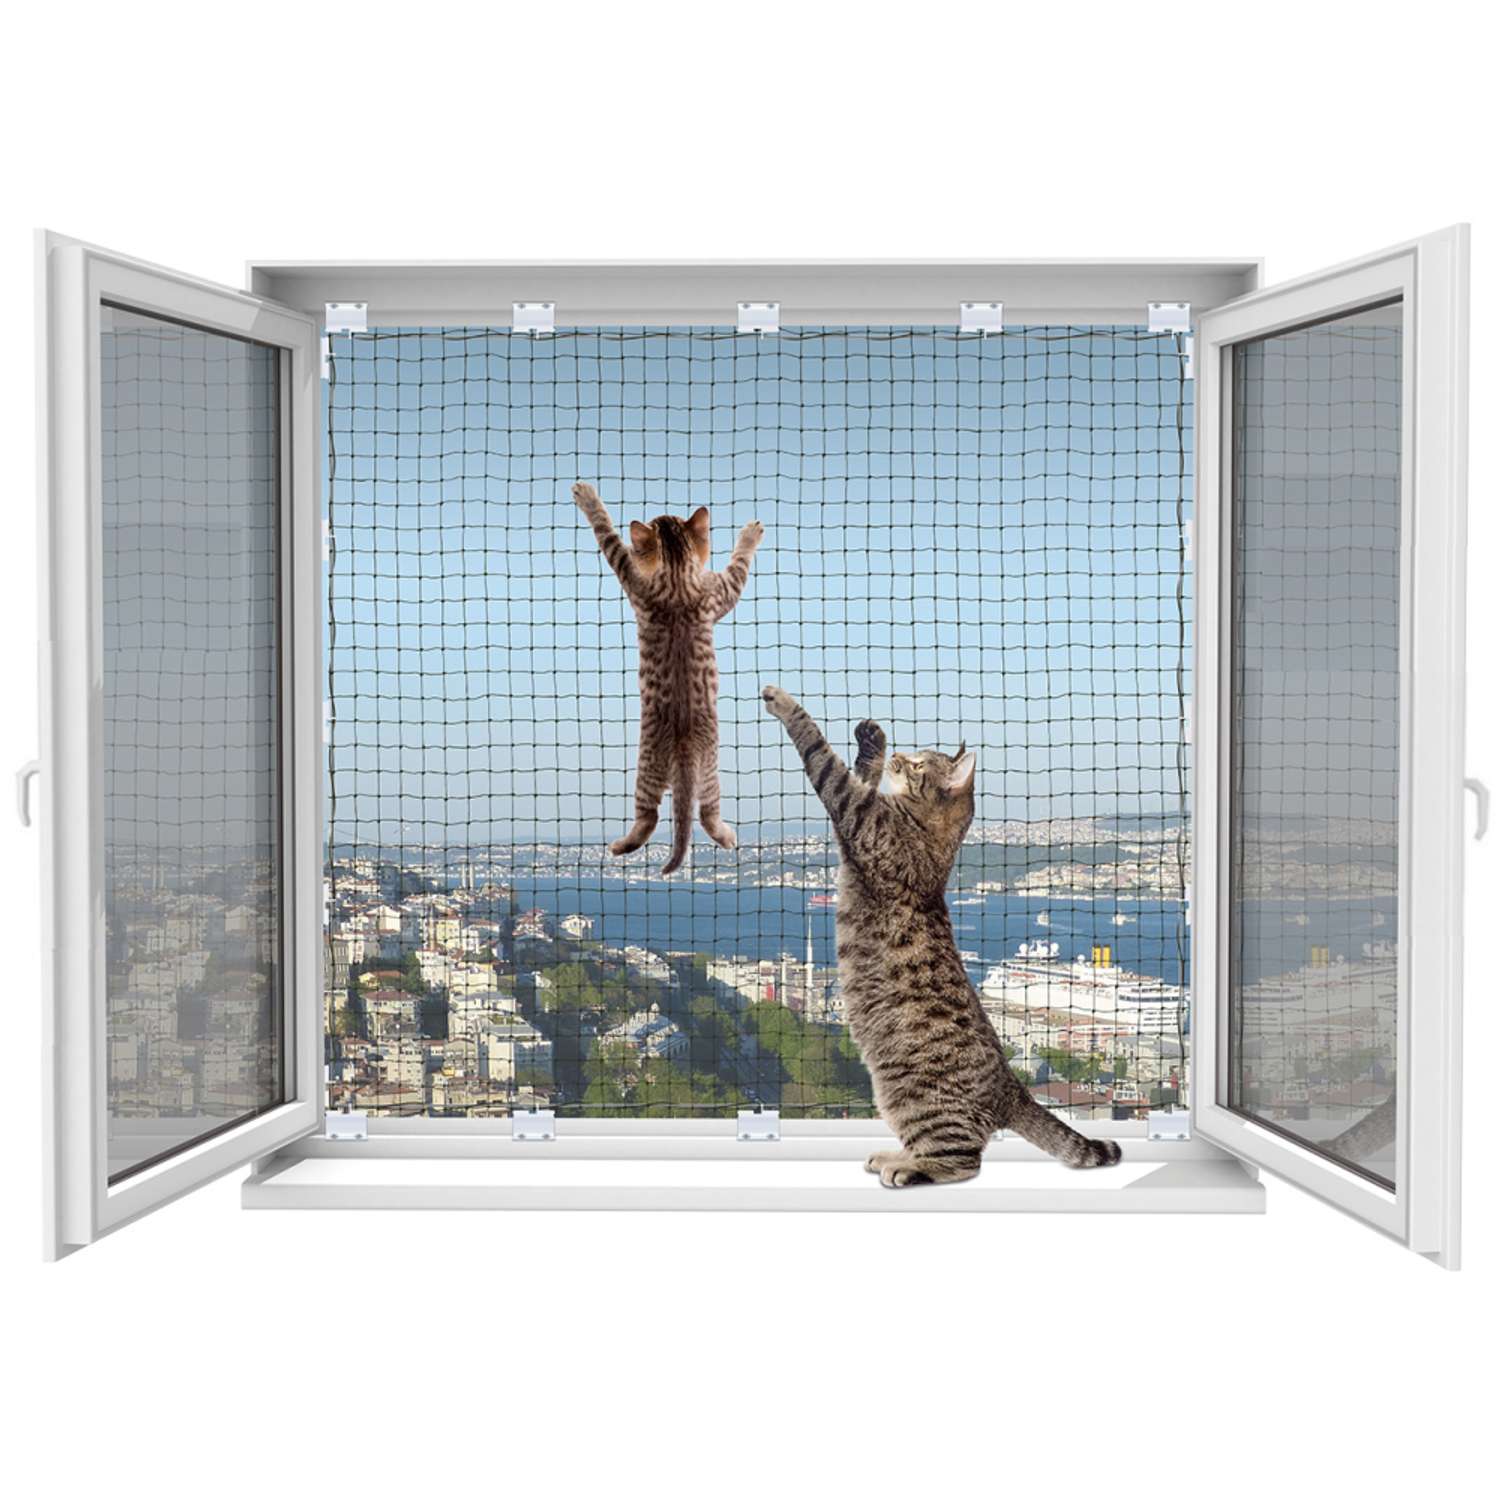 Защитная сетка WINBLOCK на окна для кошек Pets 80х140см черный кронштейн - фото 2